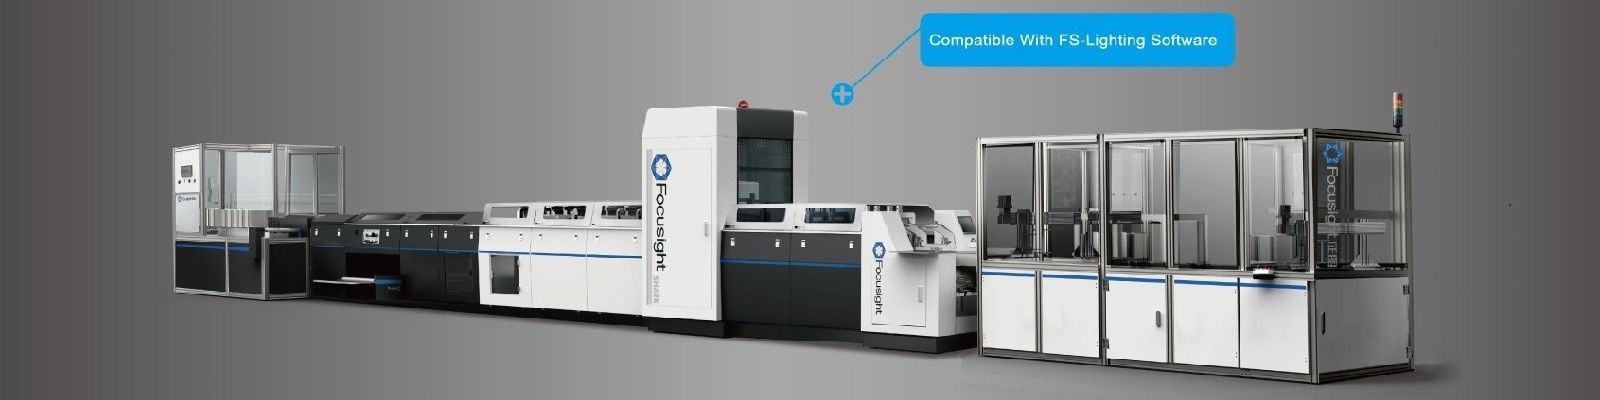 Printing Inspection Machine